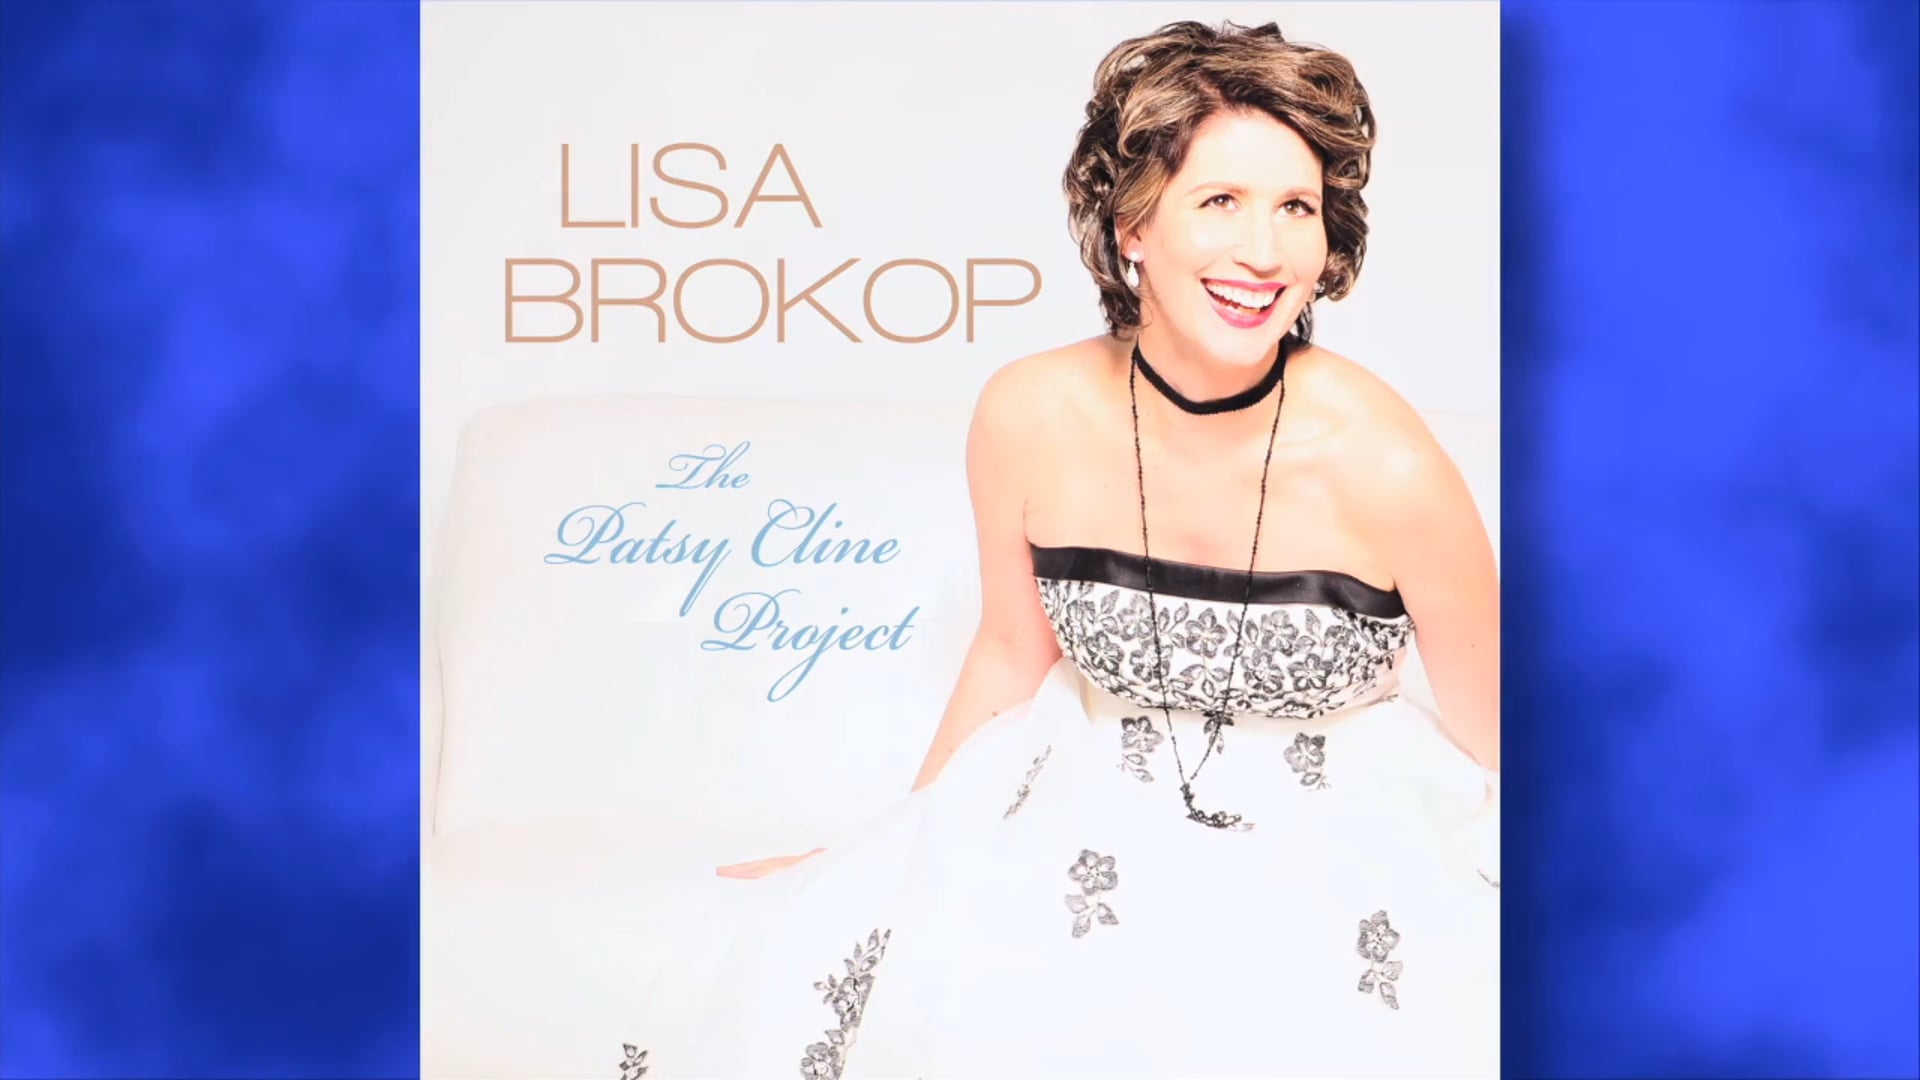 Patsy Cline Project - Lisa Brokop